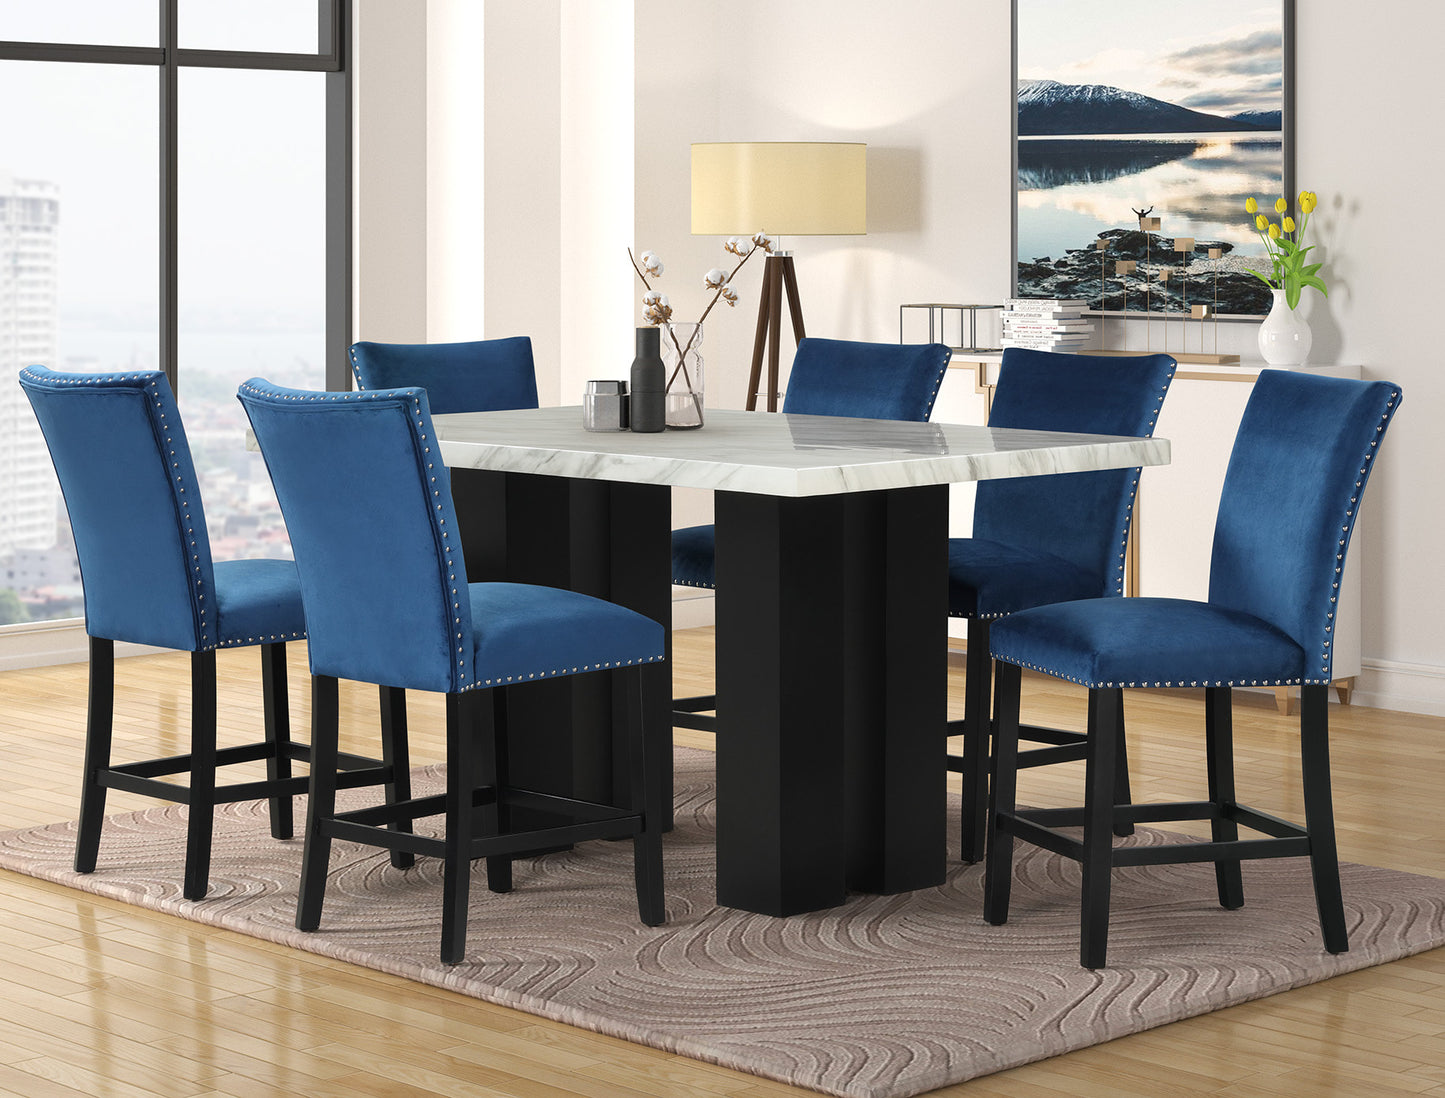 2220 - Blue Counter Height Table + 6 Chair Set (ETA 7\6 )